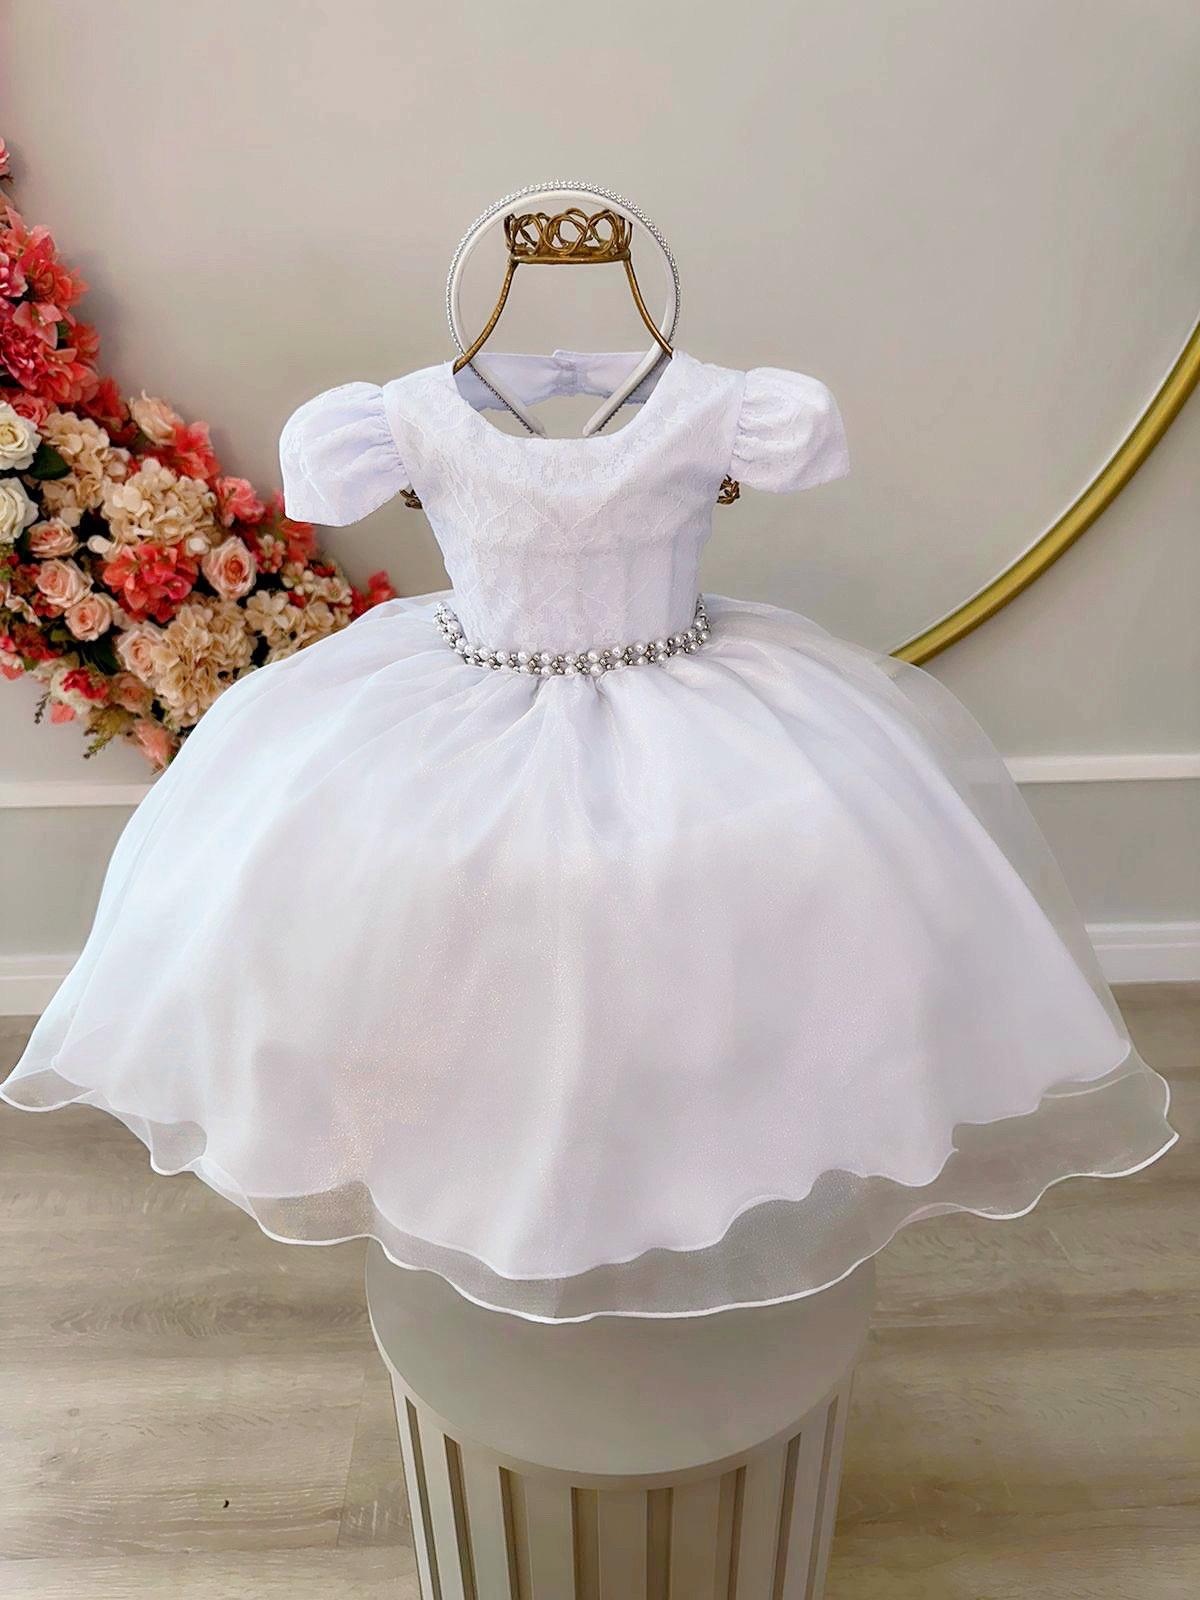 Vestido Infantil Branco Renda Damas Cinto Pérolas Tiara Luxo